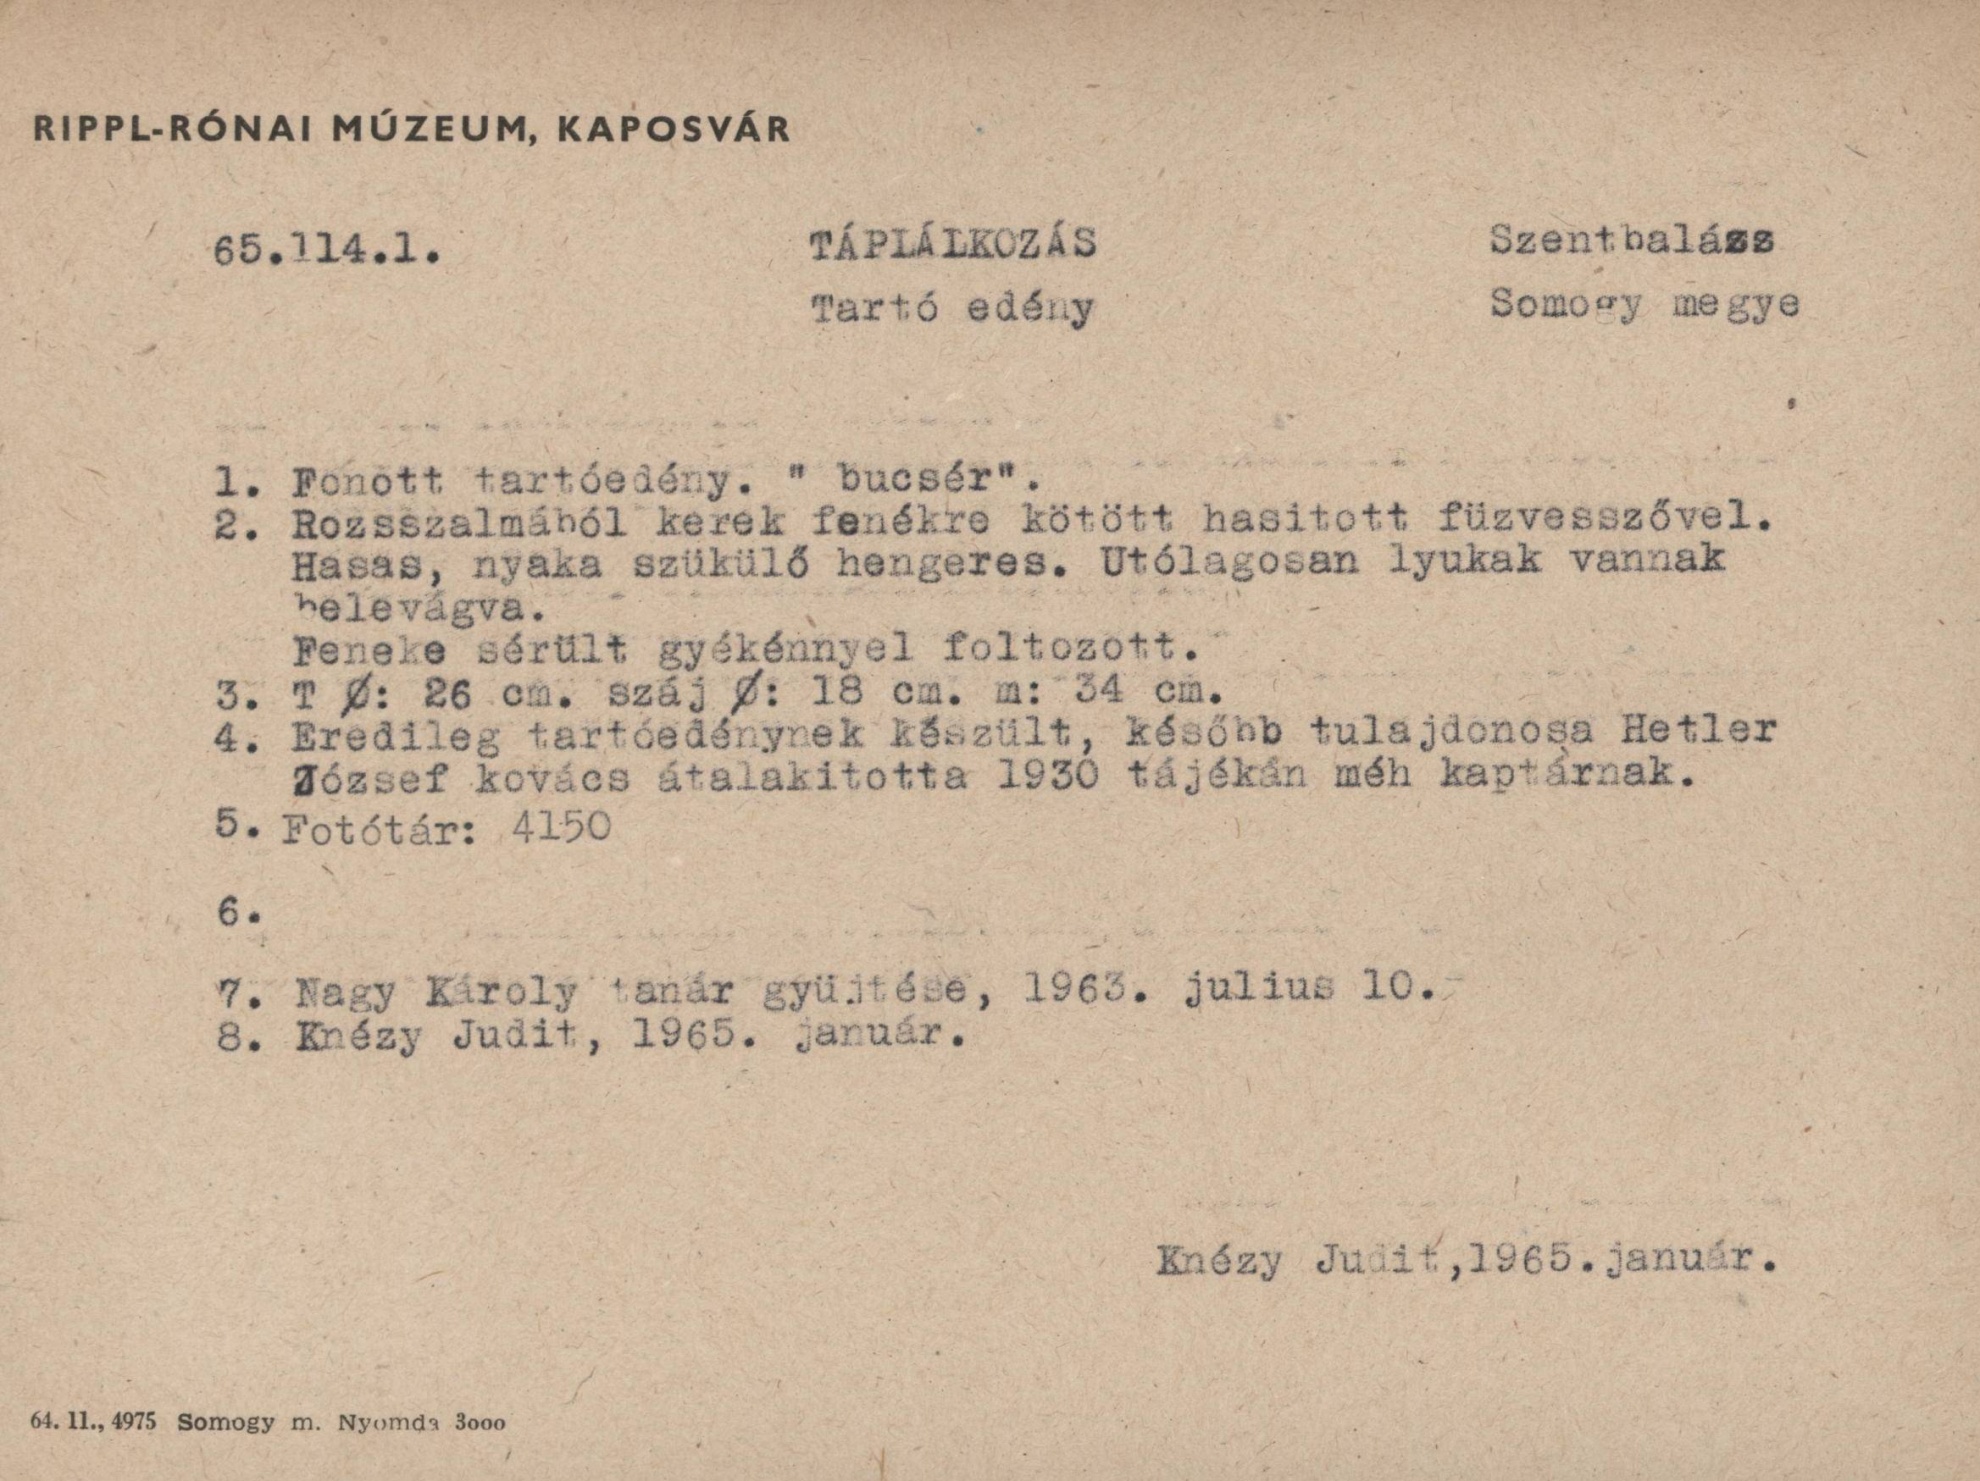 bucsér fonott tartóedény (Rippl-Rónai Múzeum CC BY-NC-SA)